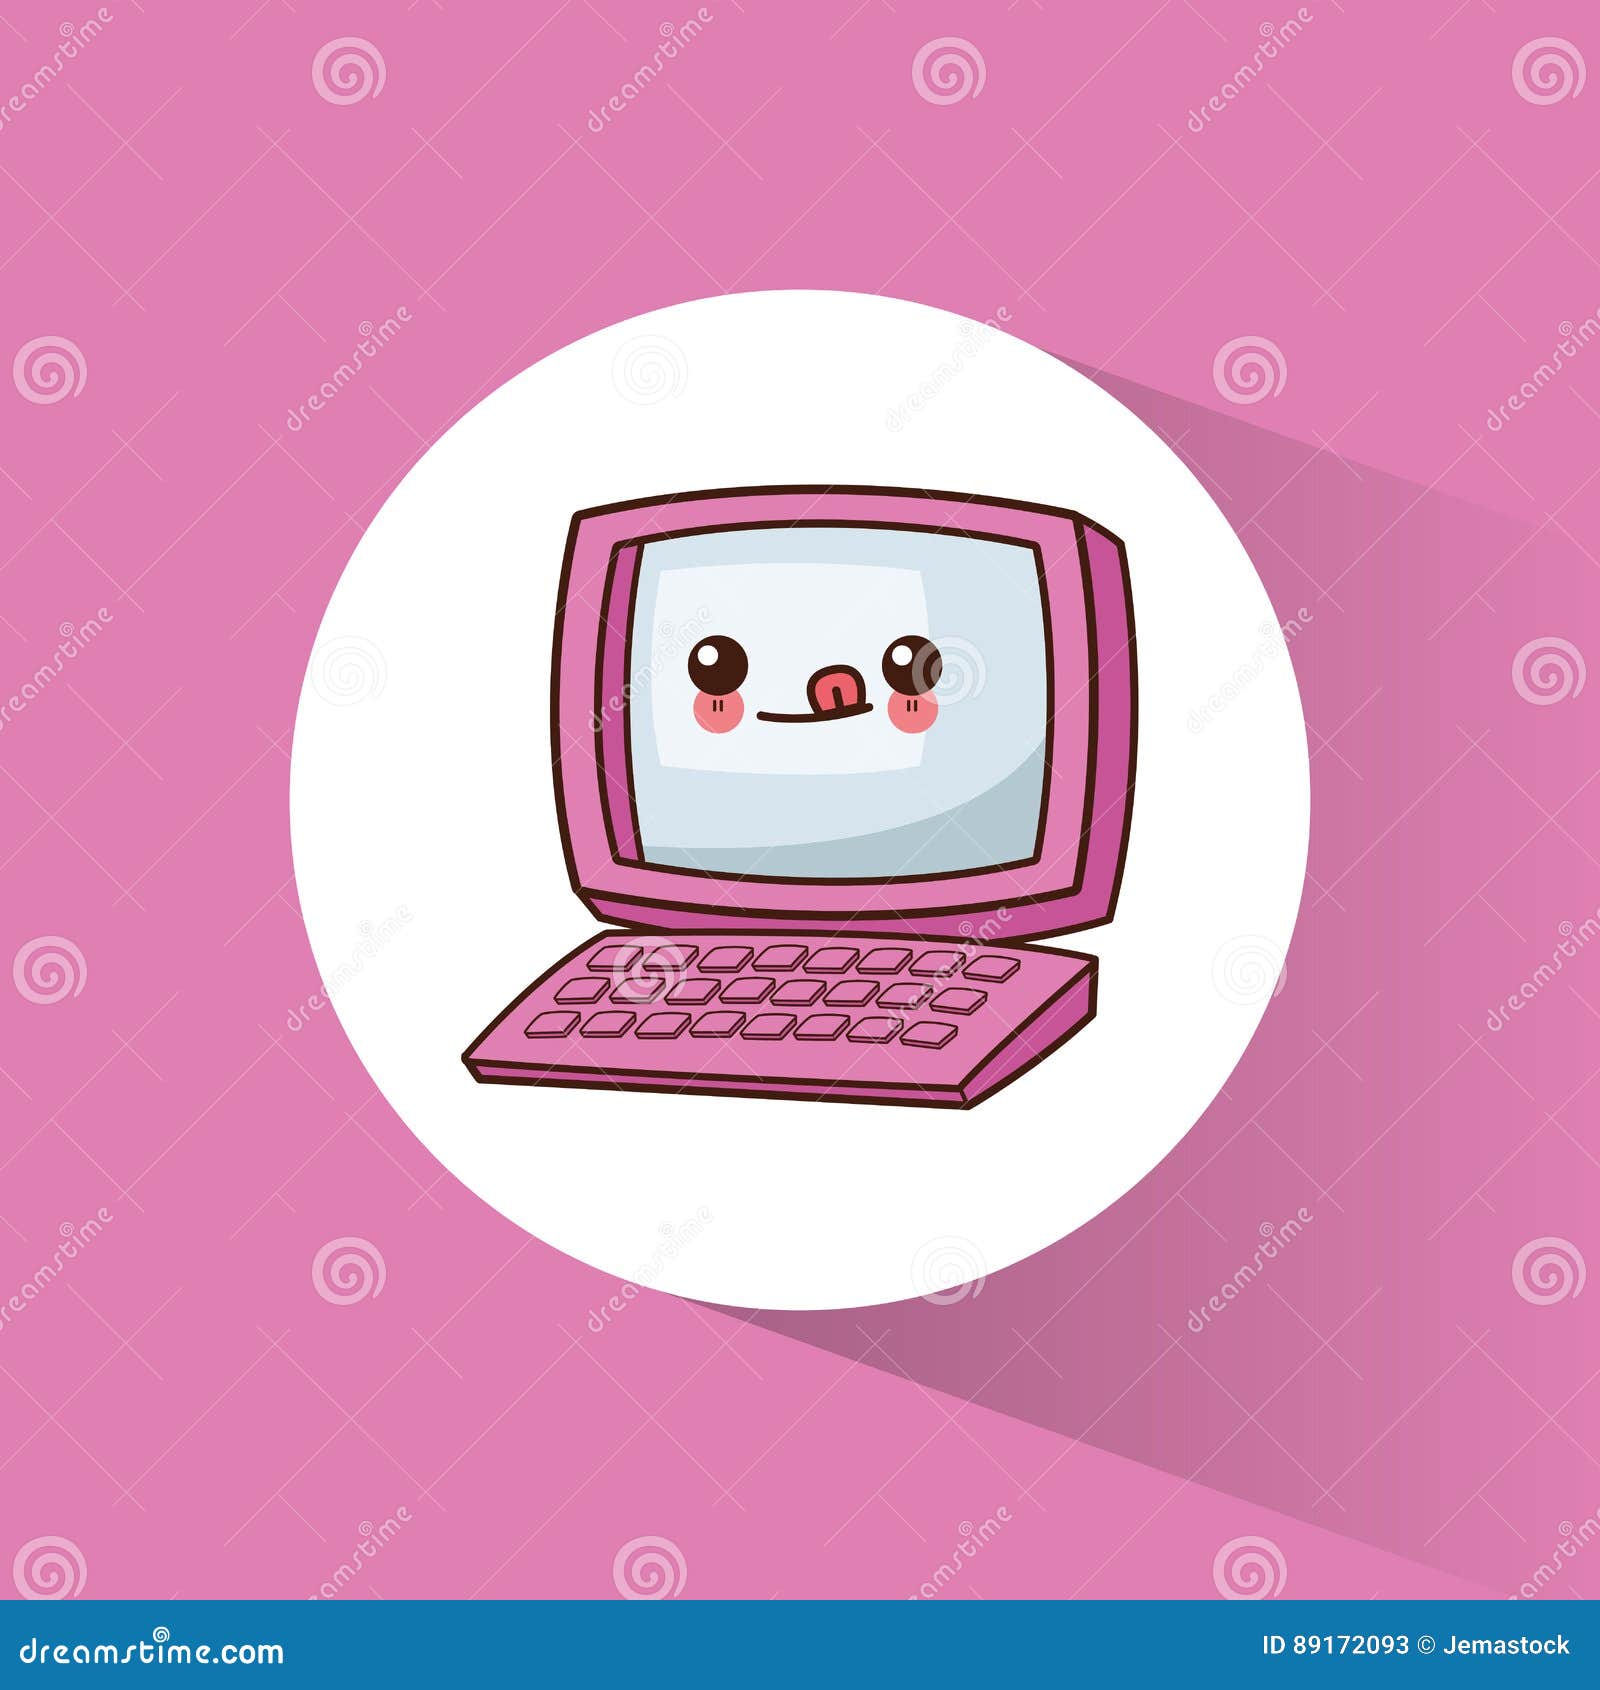 Kawaii Computer Technology Image Stock Illustration - Illustration of ...